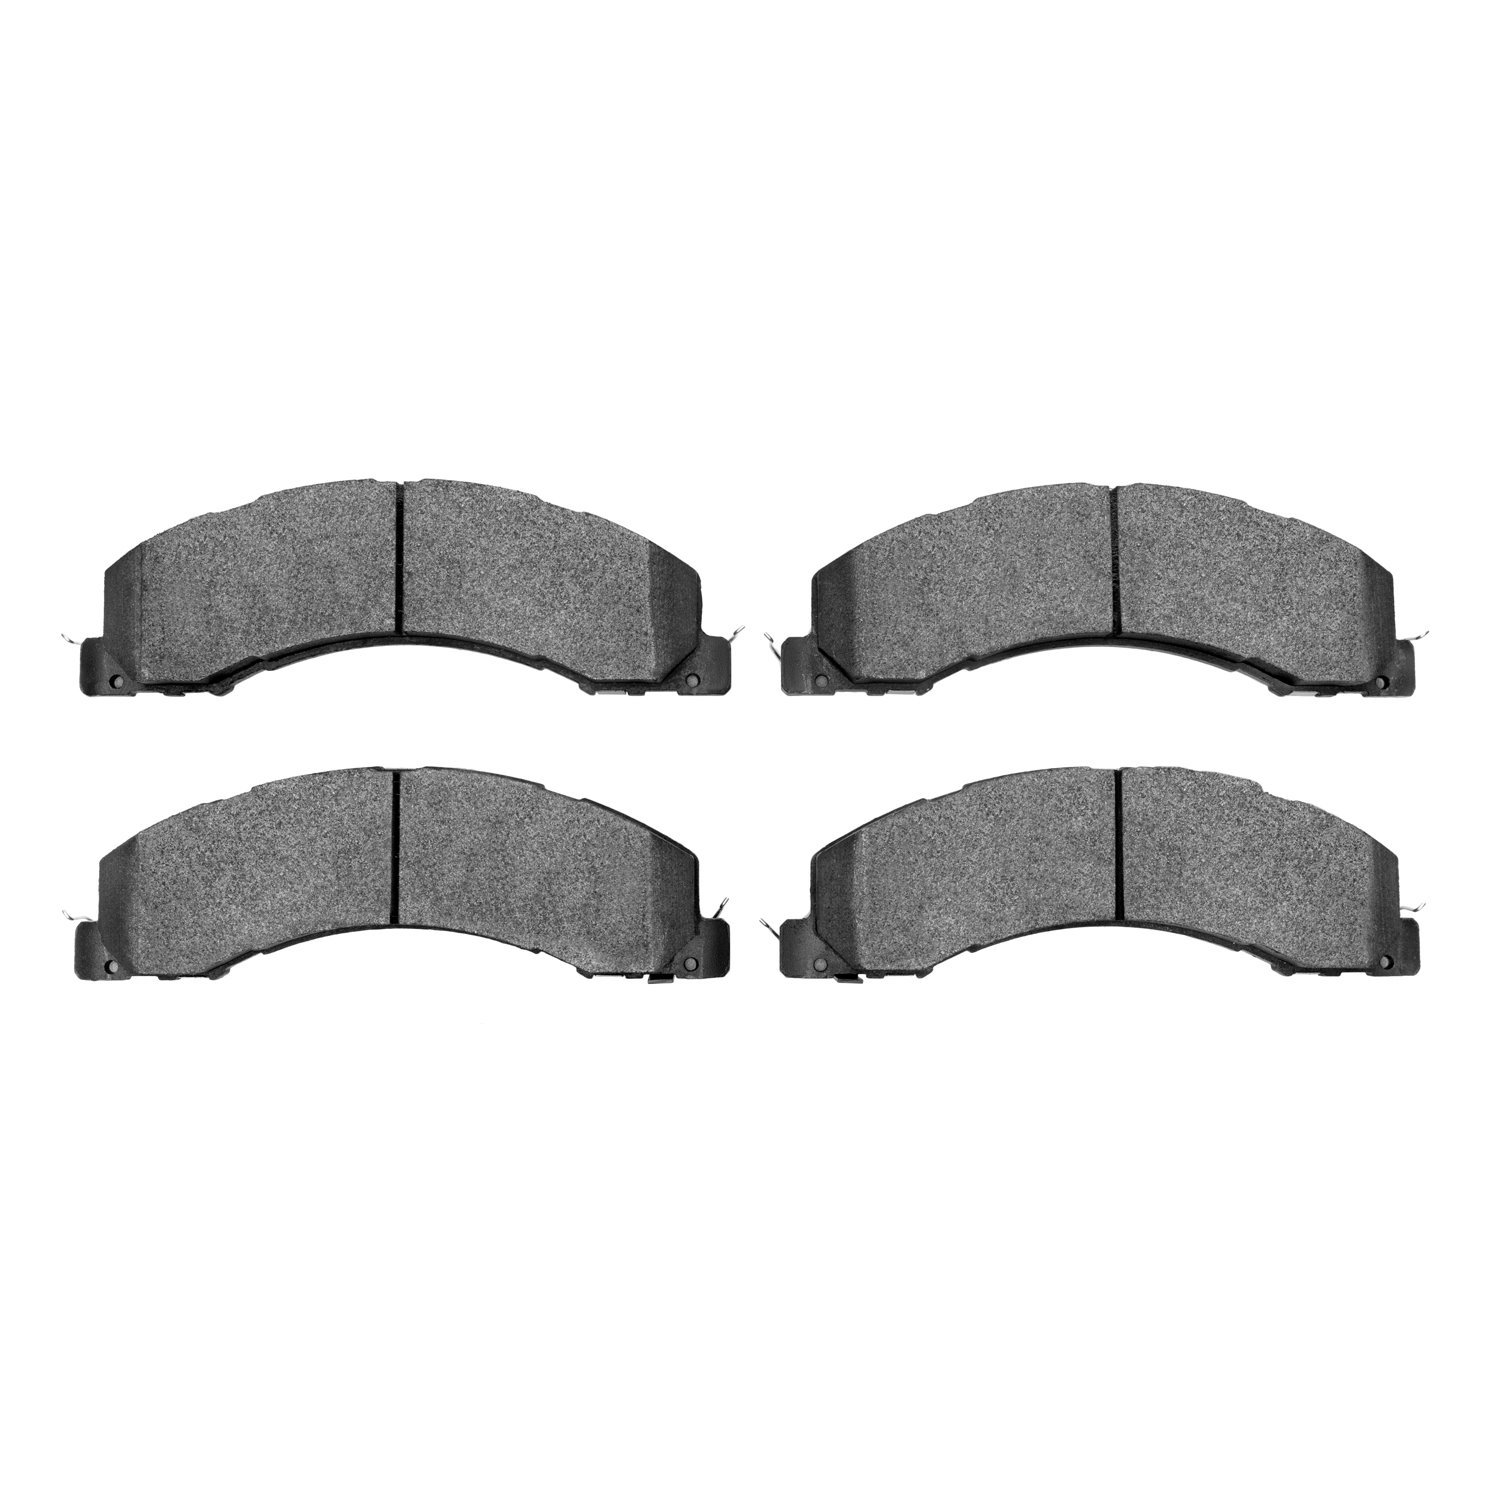 1551-1335-00 5000 Advanced Semi-Metallic Brake Pads, Fits Select Multiple Makes/Models, Position: Front,Fr & Rr,Rear